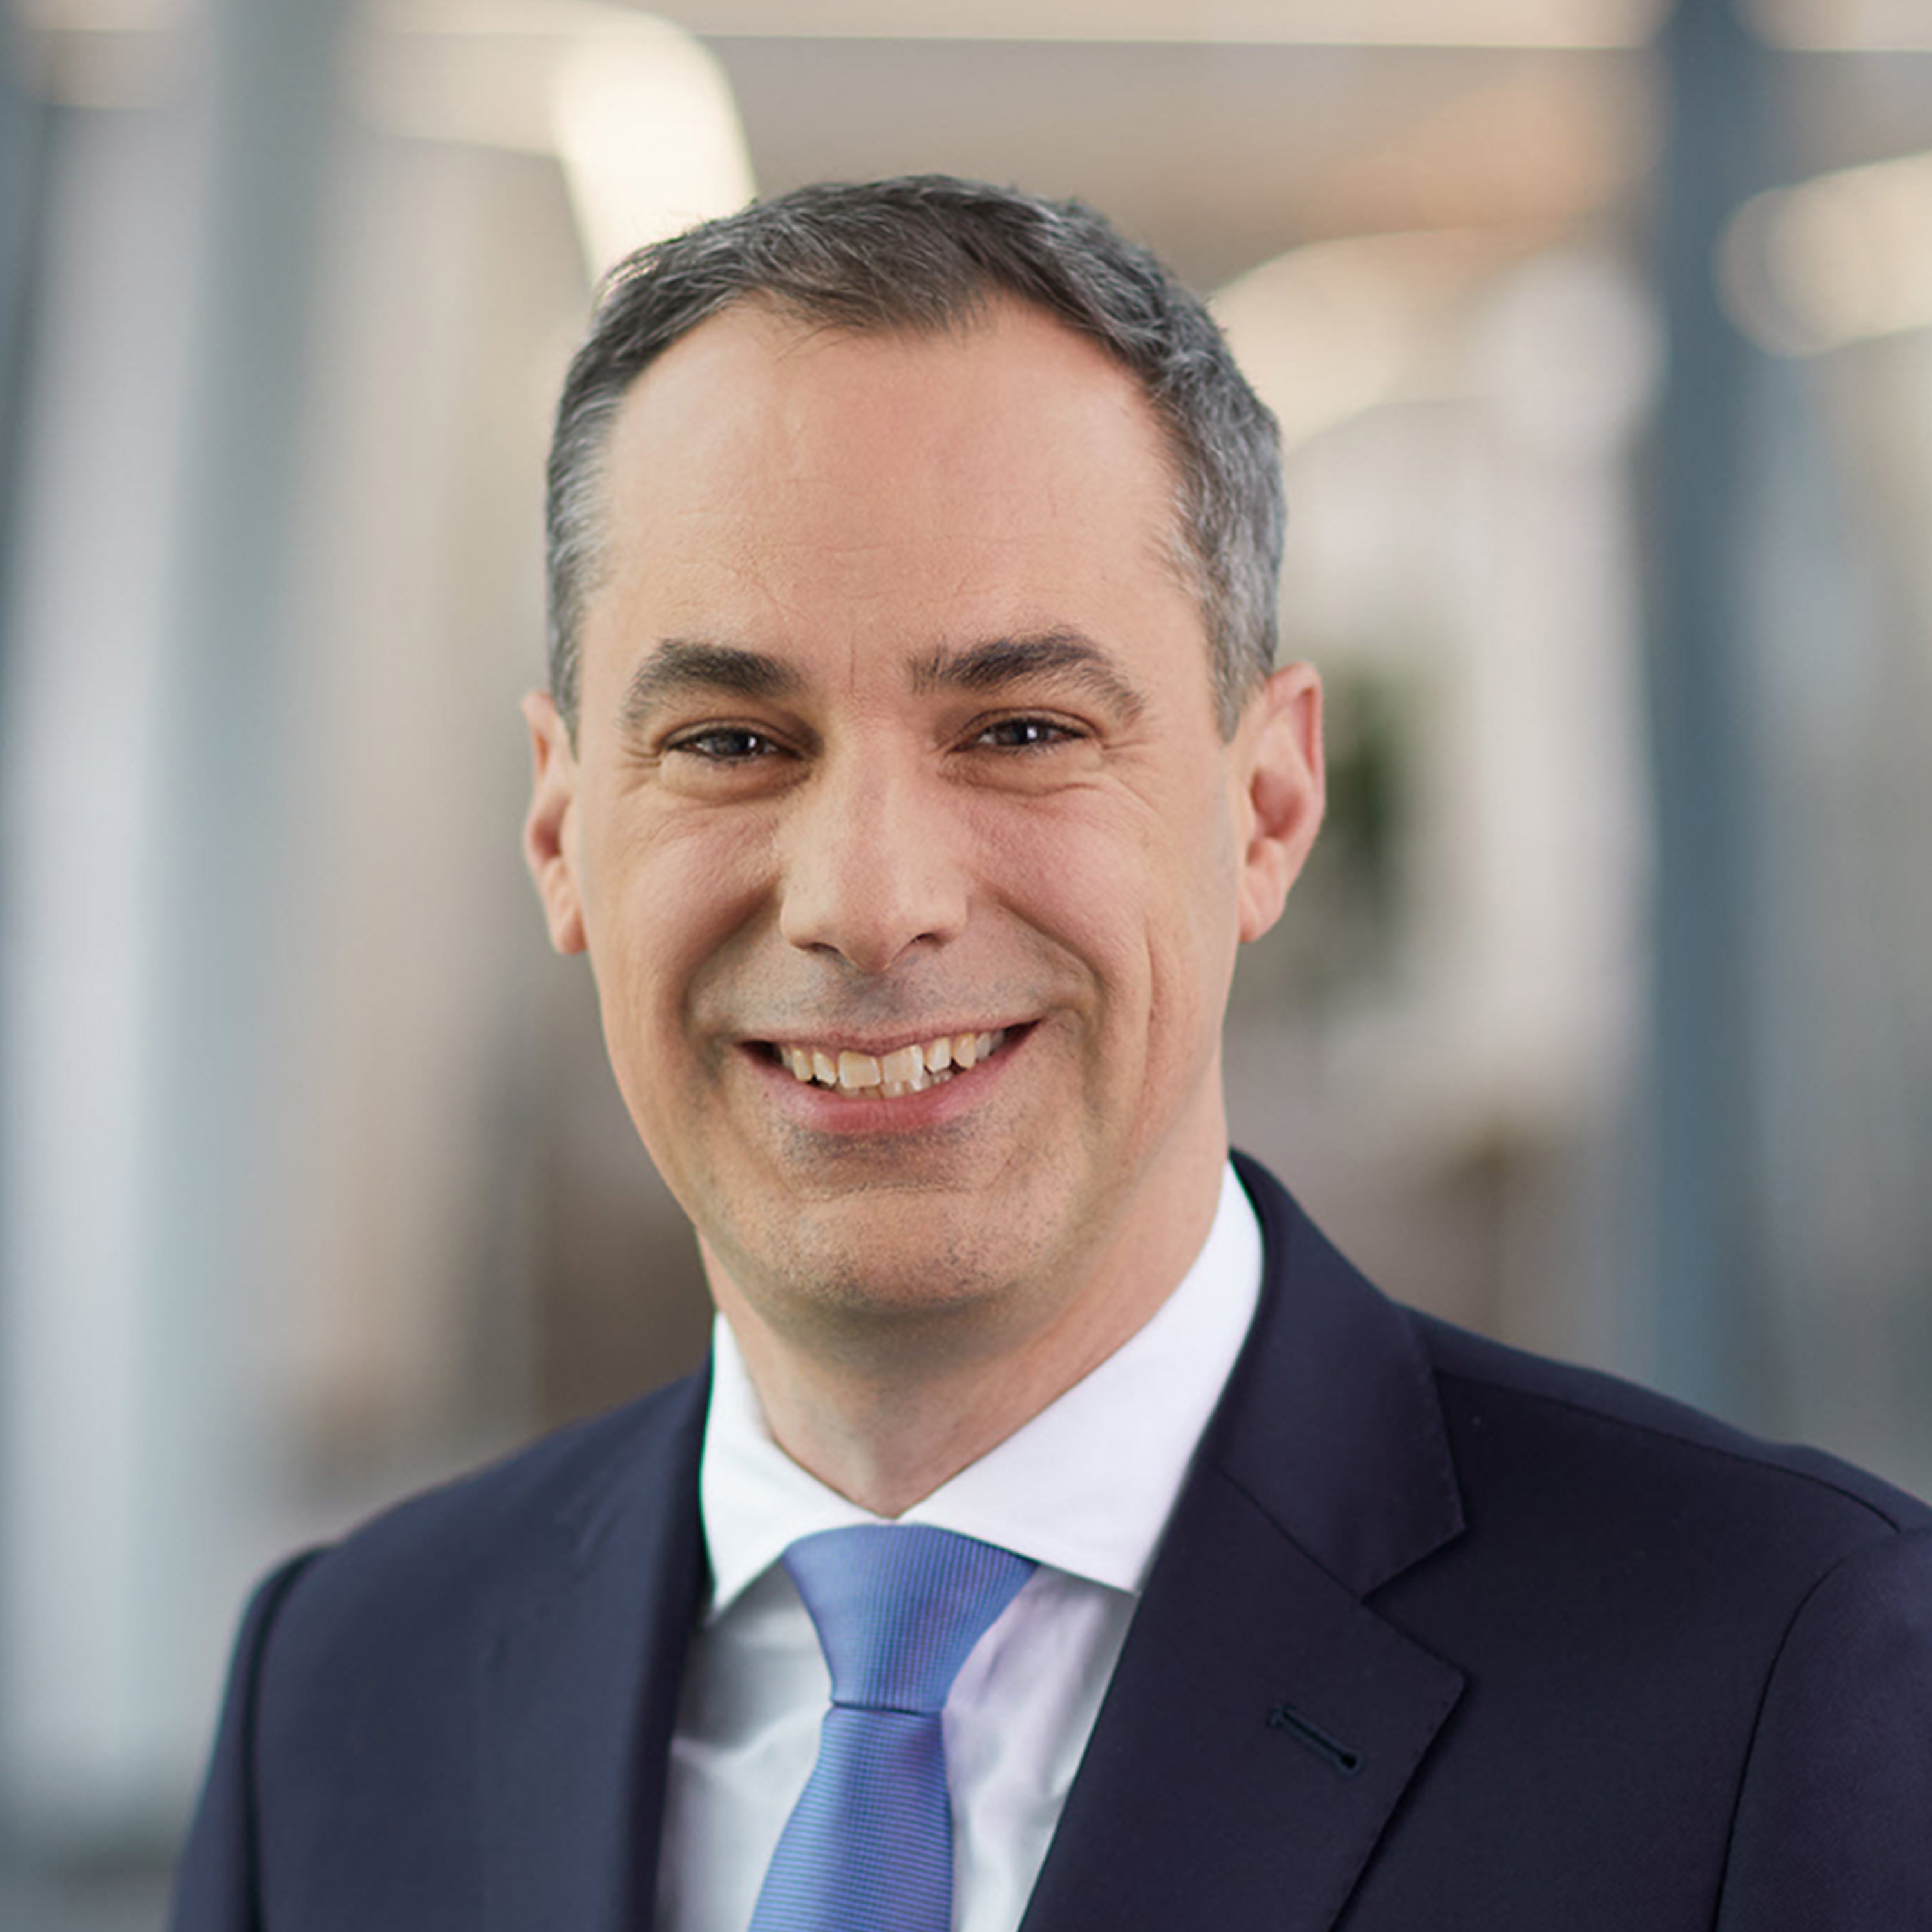 Cedrik Neike, member of the board of Siemens AG